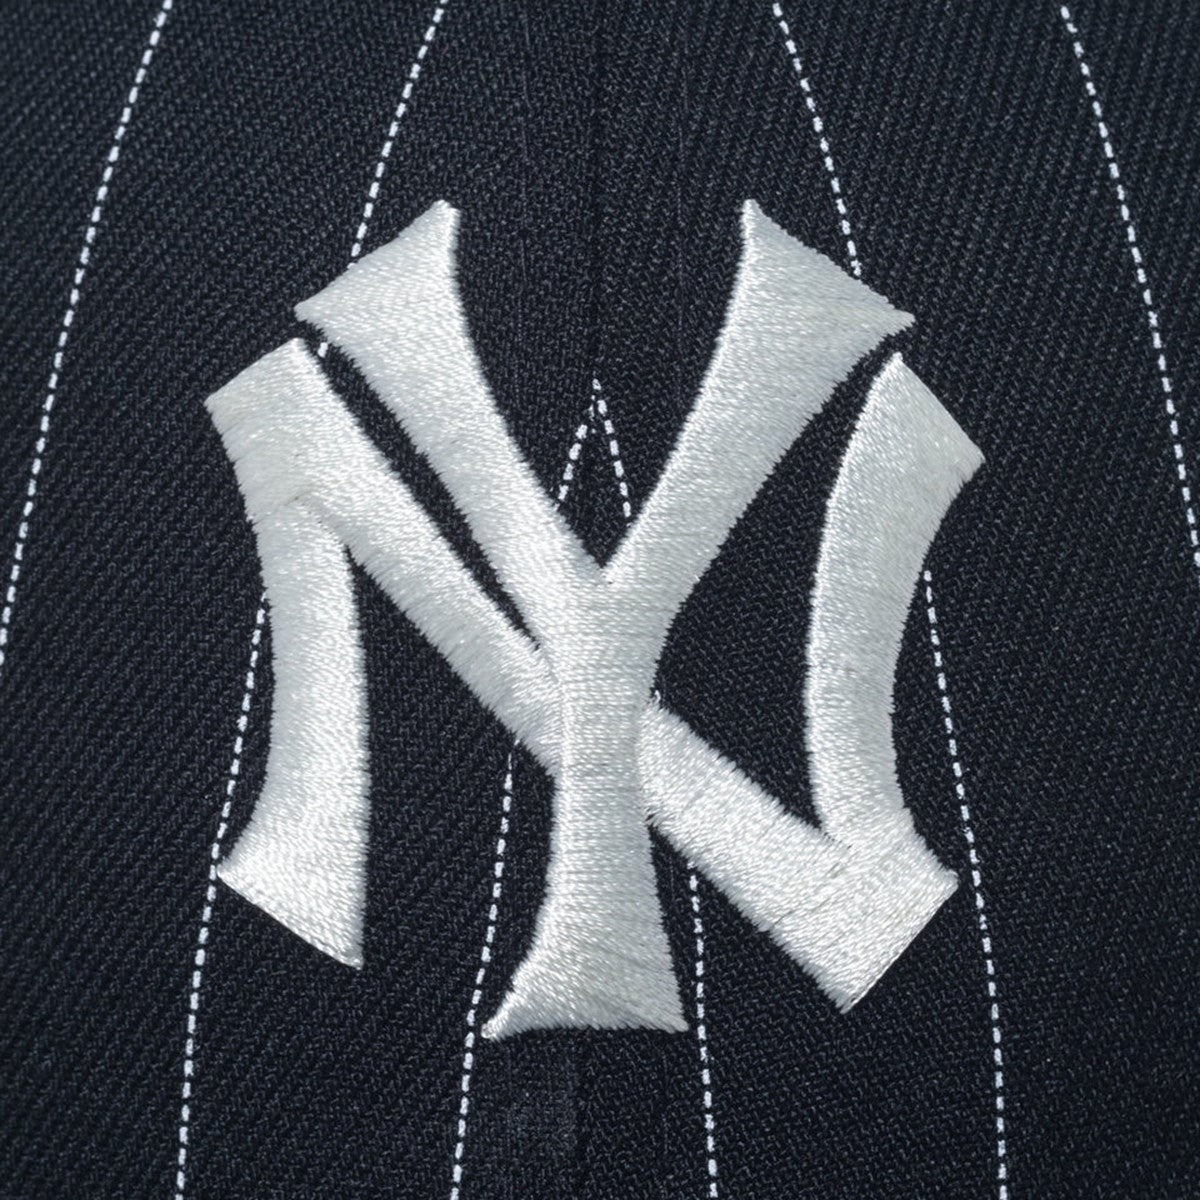 【KIDS】NEW ERA New York Yankees -  LP9FIFTY NEYYANCO PINSTR BLK 【14111980】